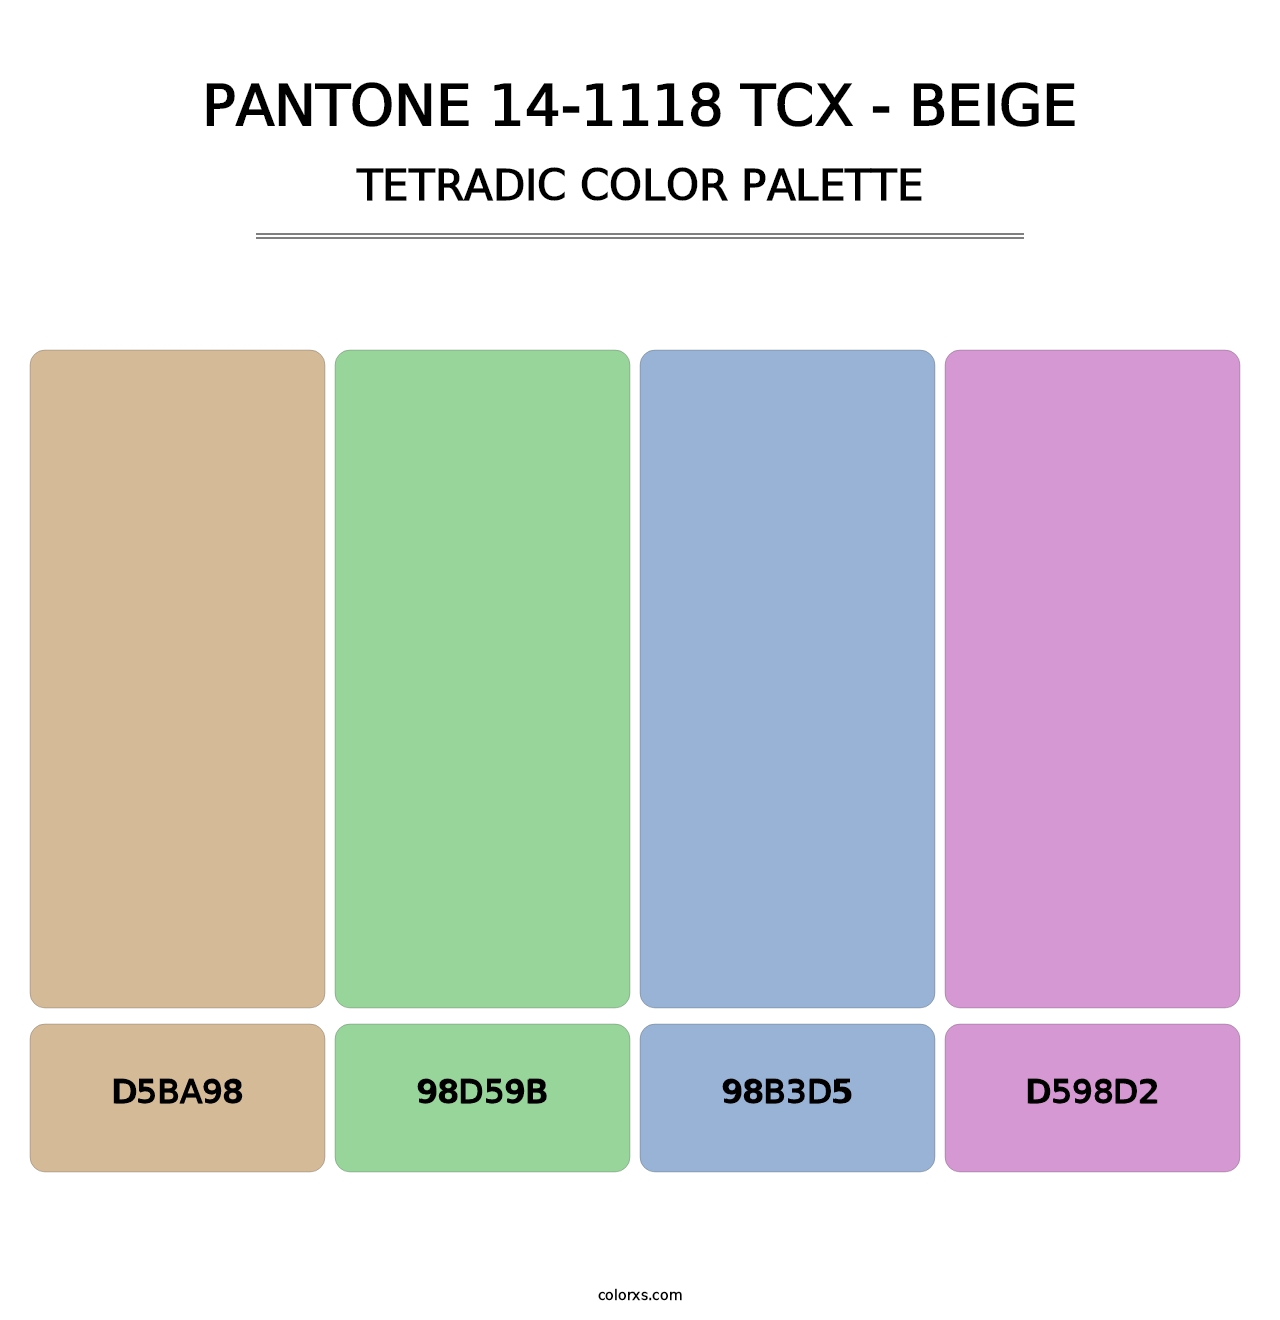 PANTONE 14-1118 TCX - Beige - Tetradic Color Palette